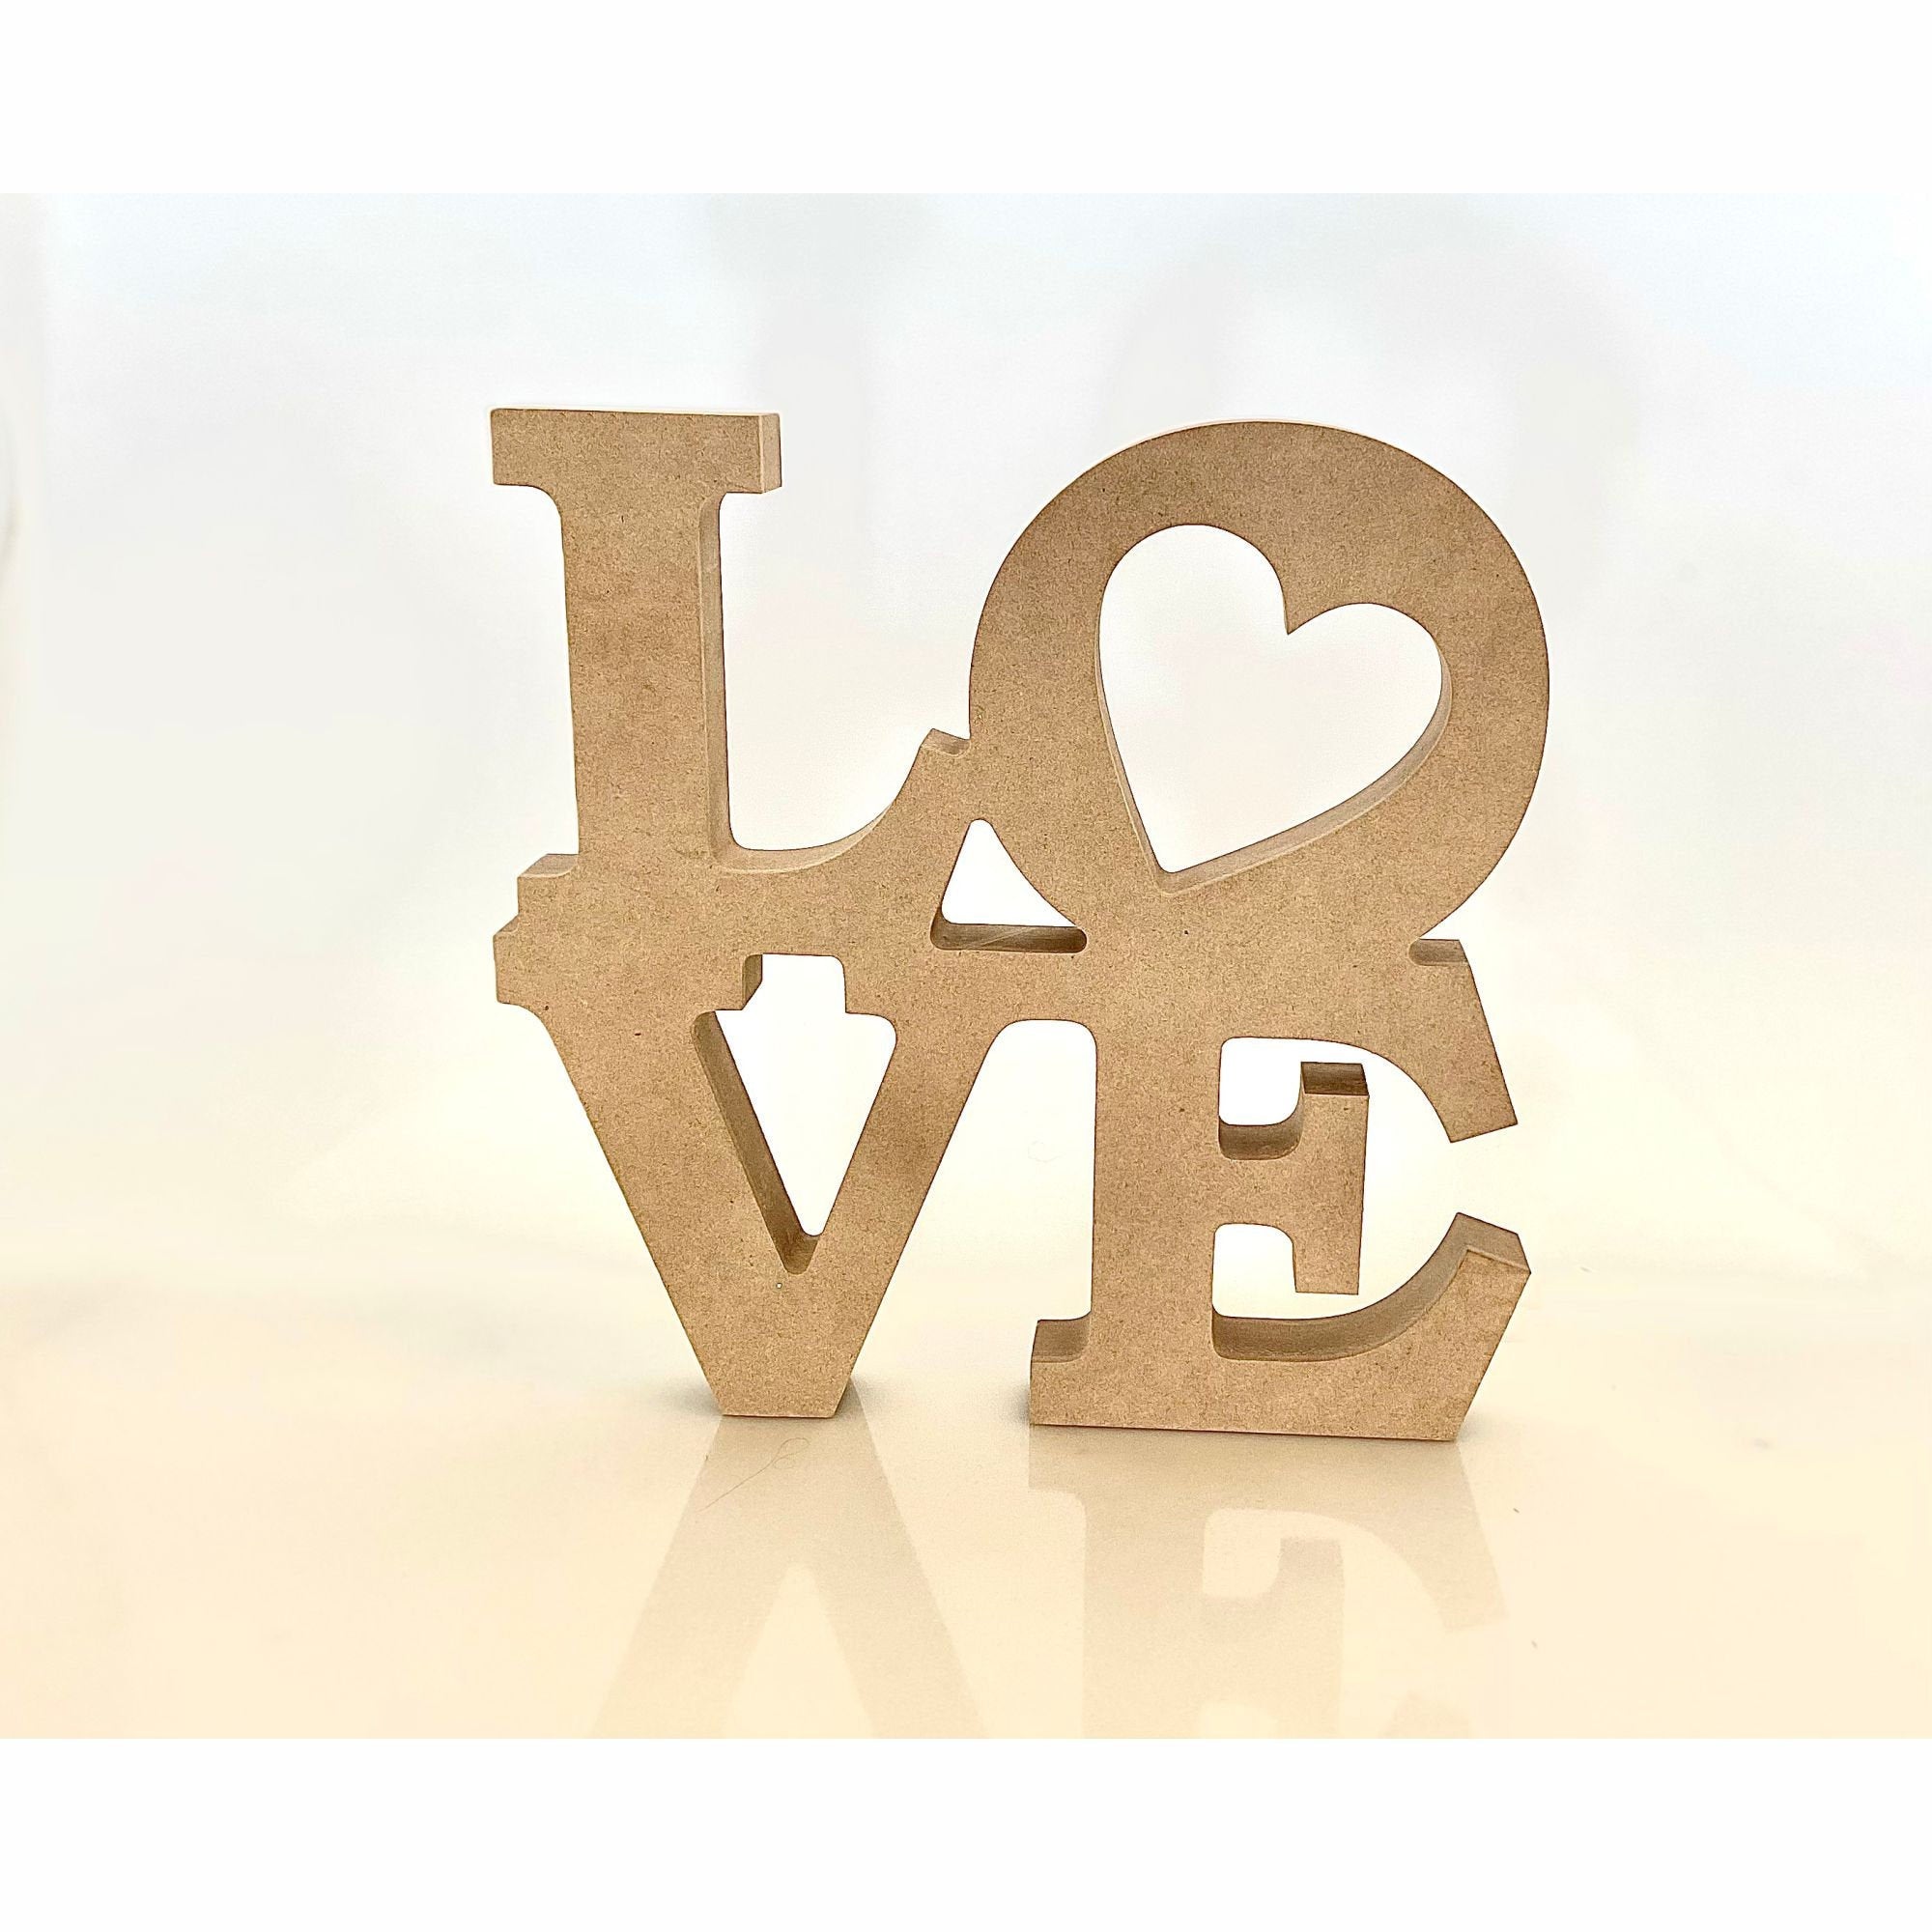 Cutest love letters ever 📝💌 : r/Louisvuitton